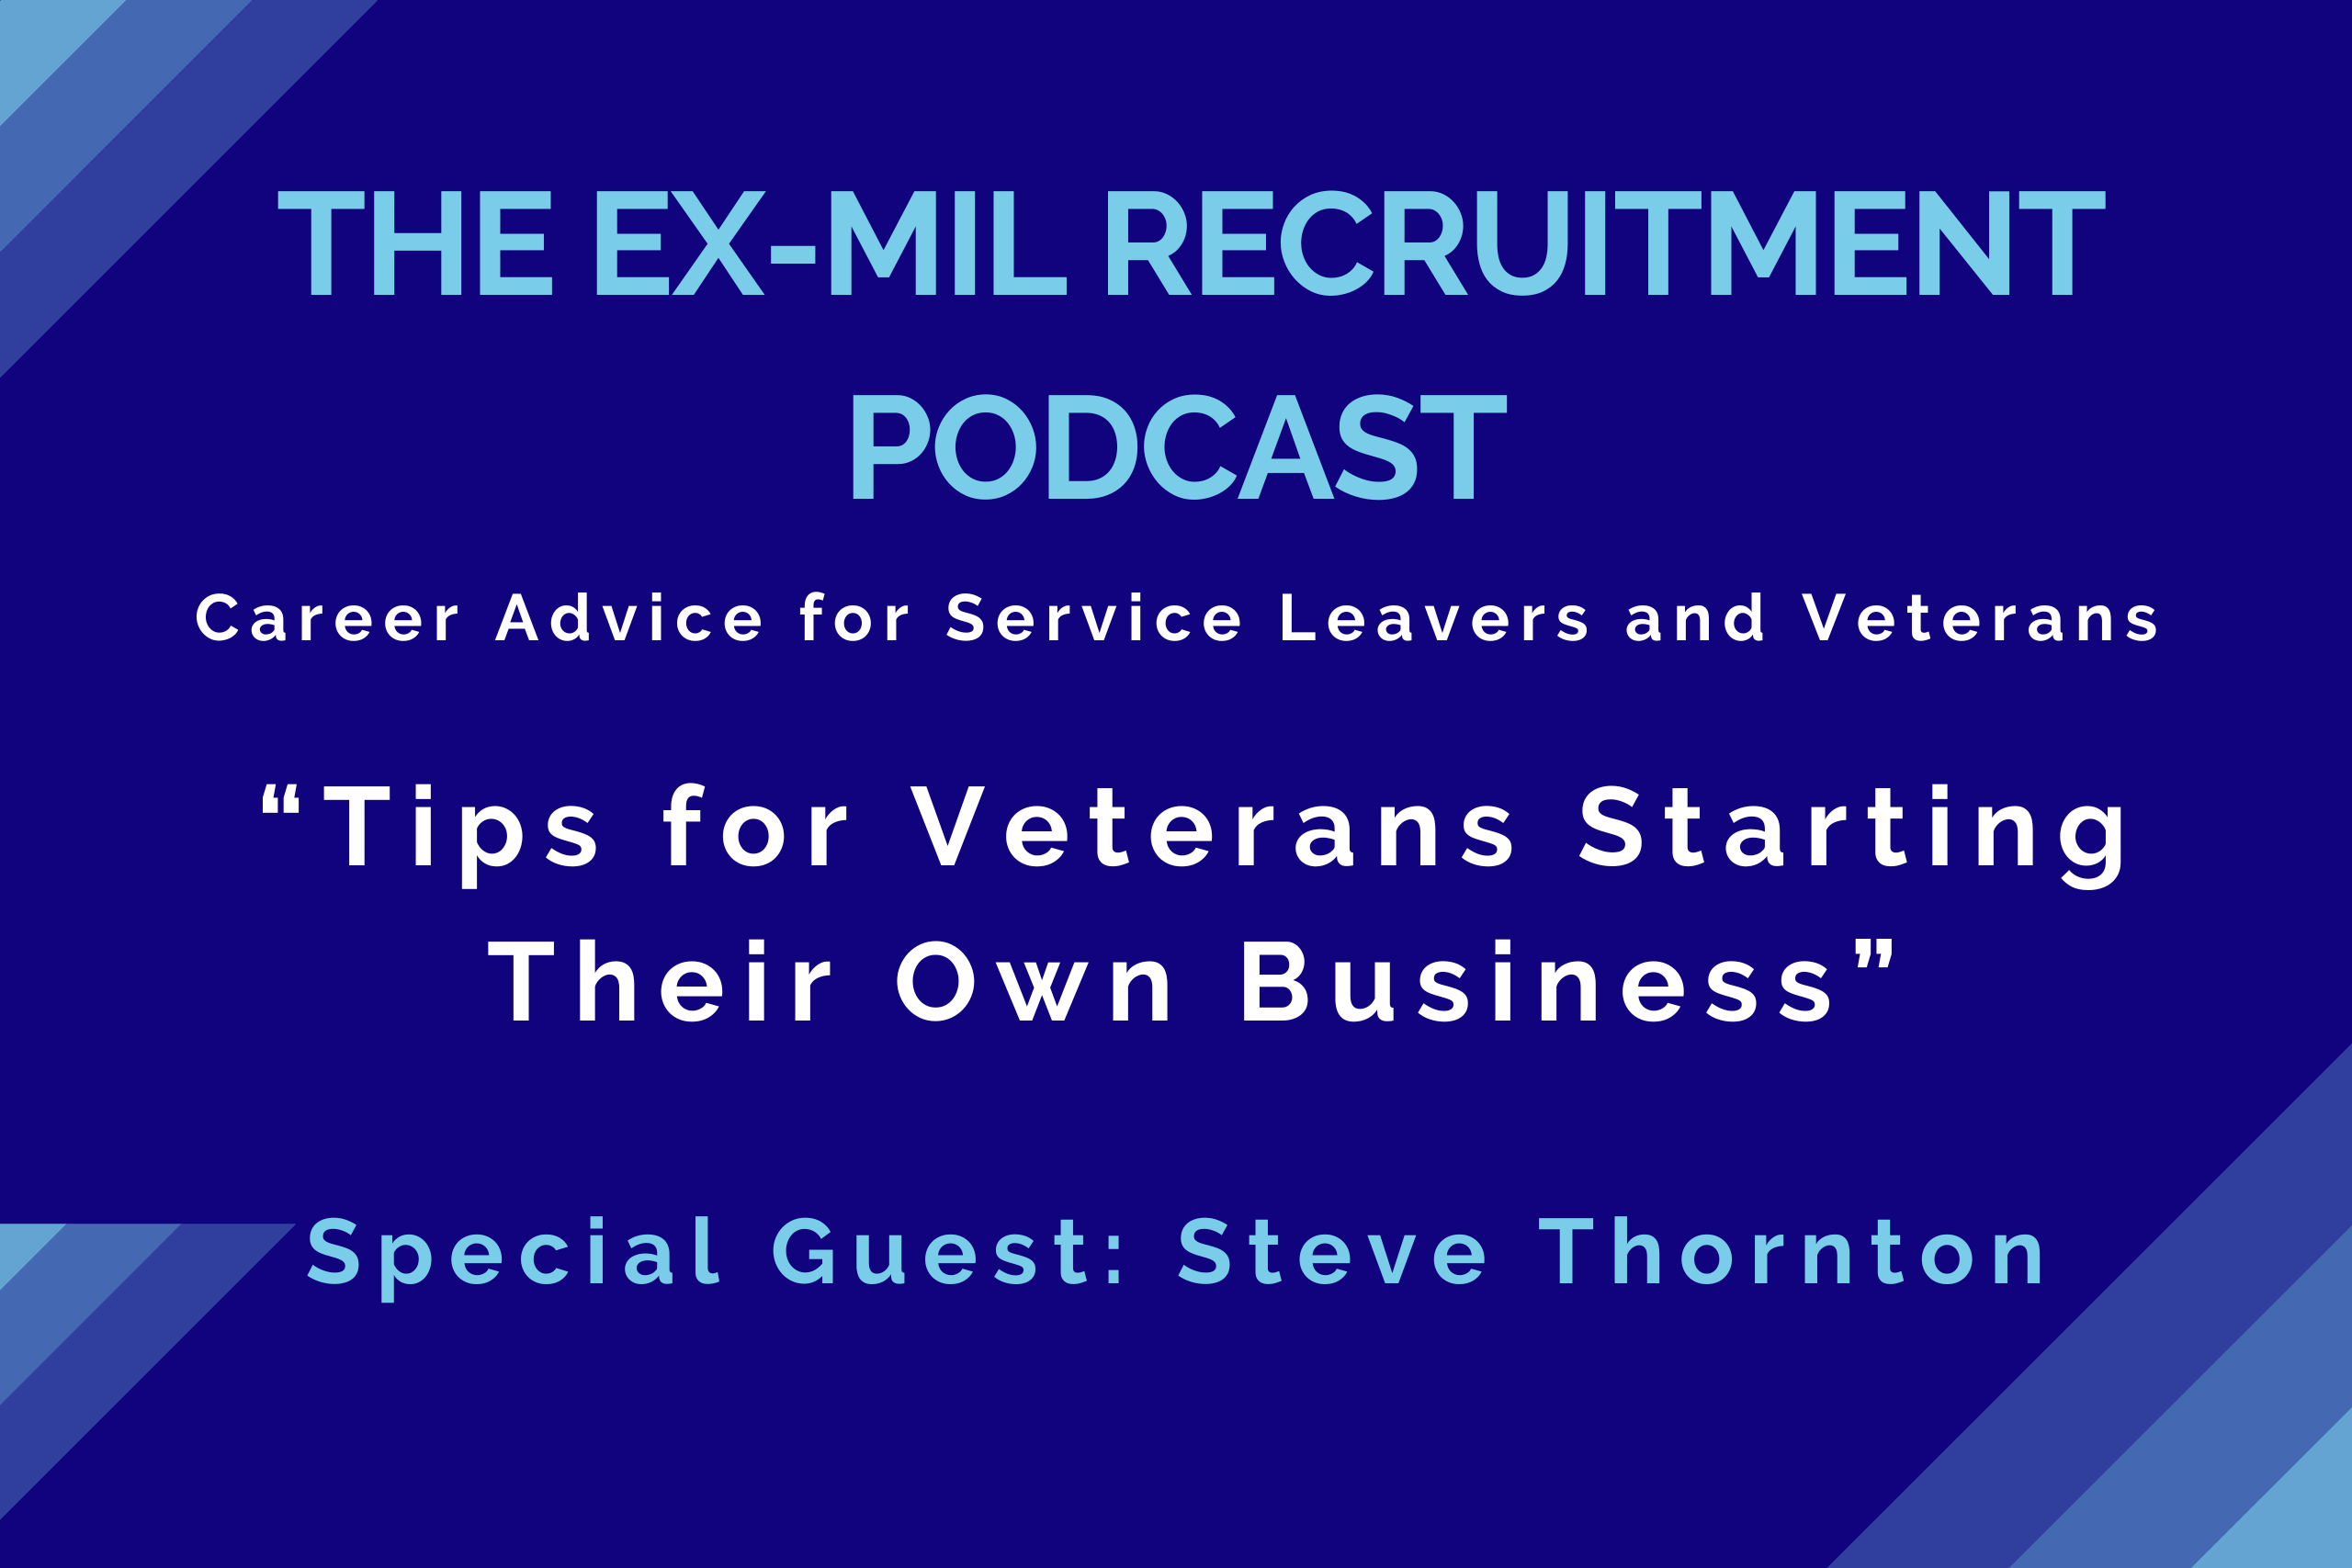 Episode 32 – “Best Tips for Veterans Starting Their Own Business” with Steve Thornton